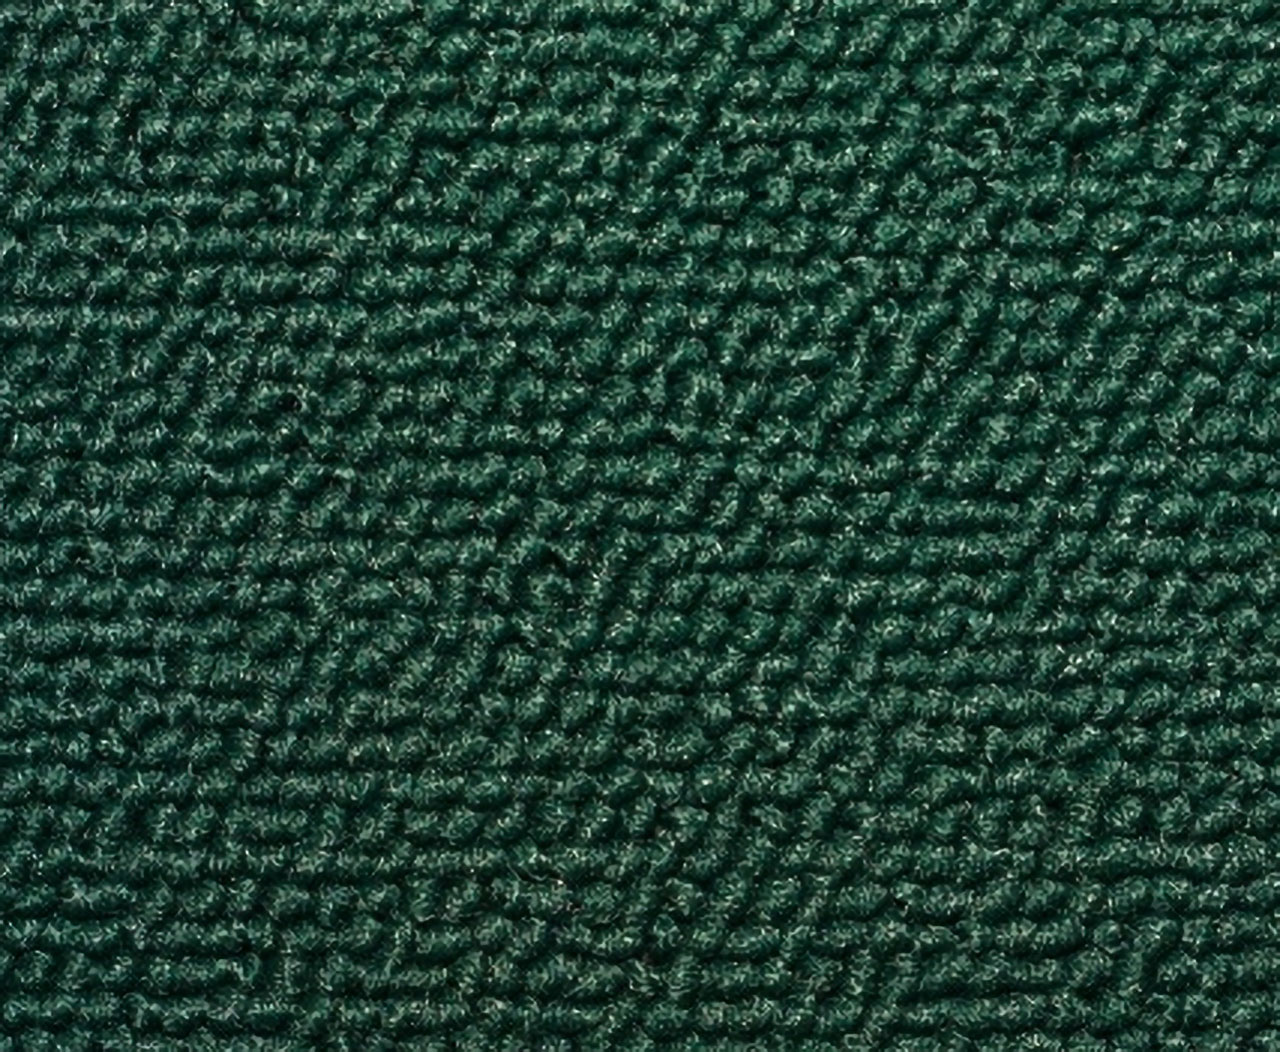 Holden Standard HR Standard Panel Van E75 Opera Green Carpet (Image 1 of 1)